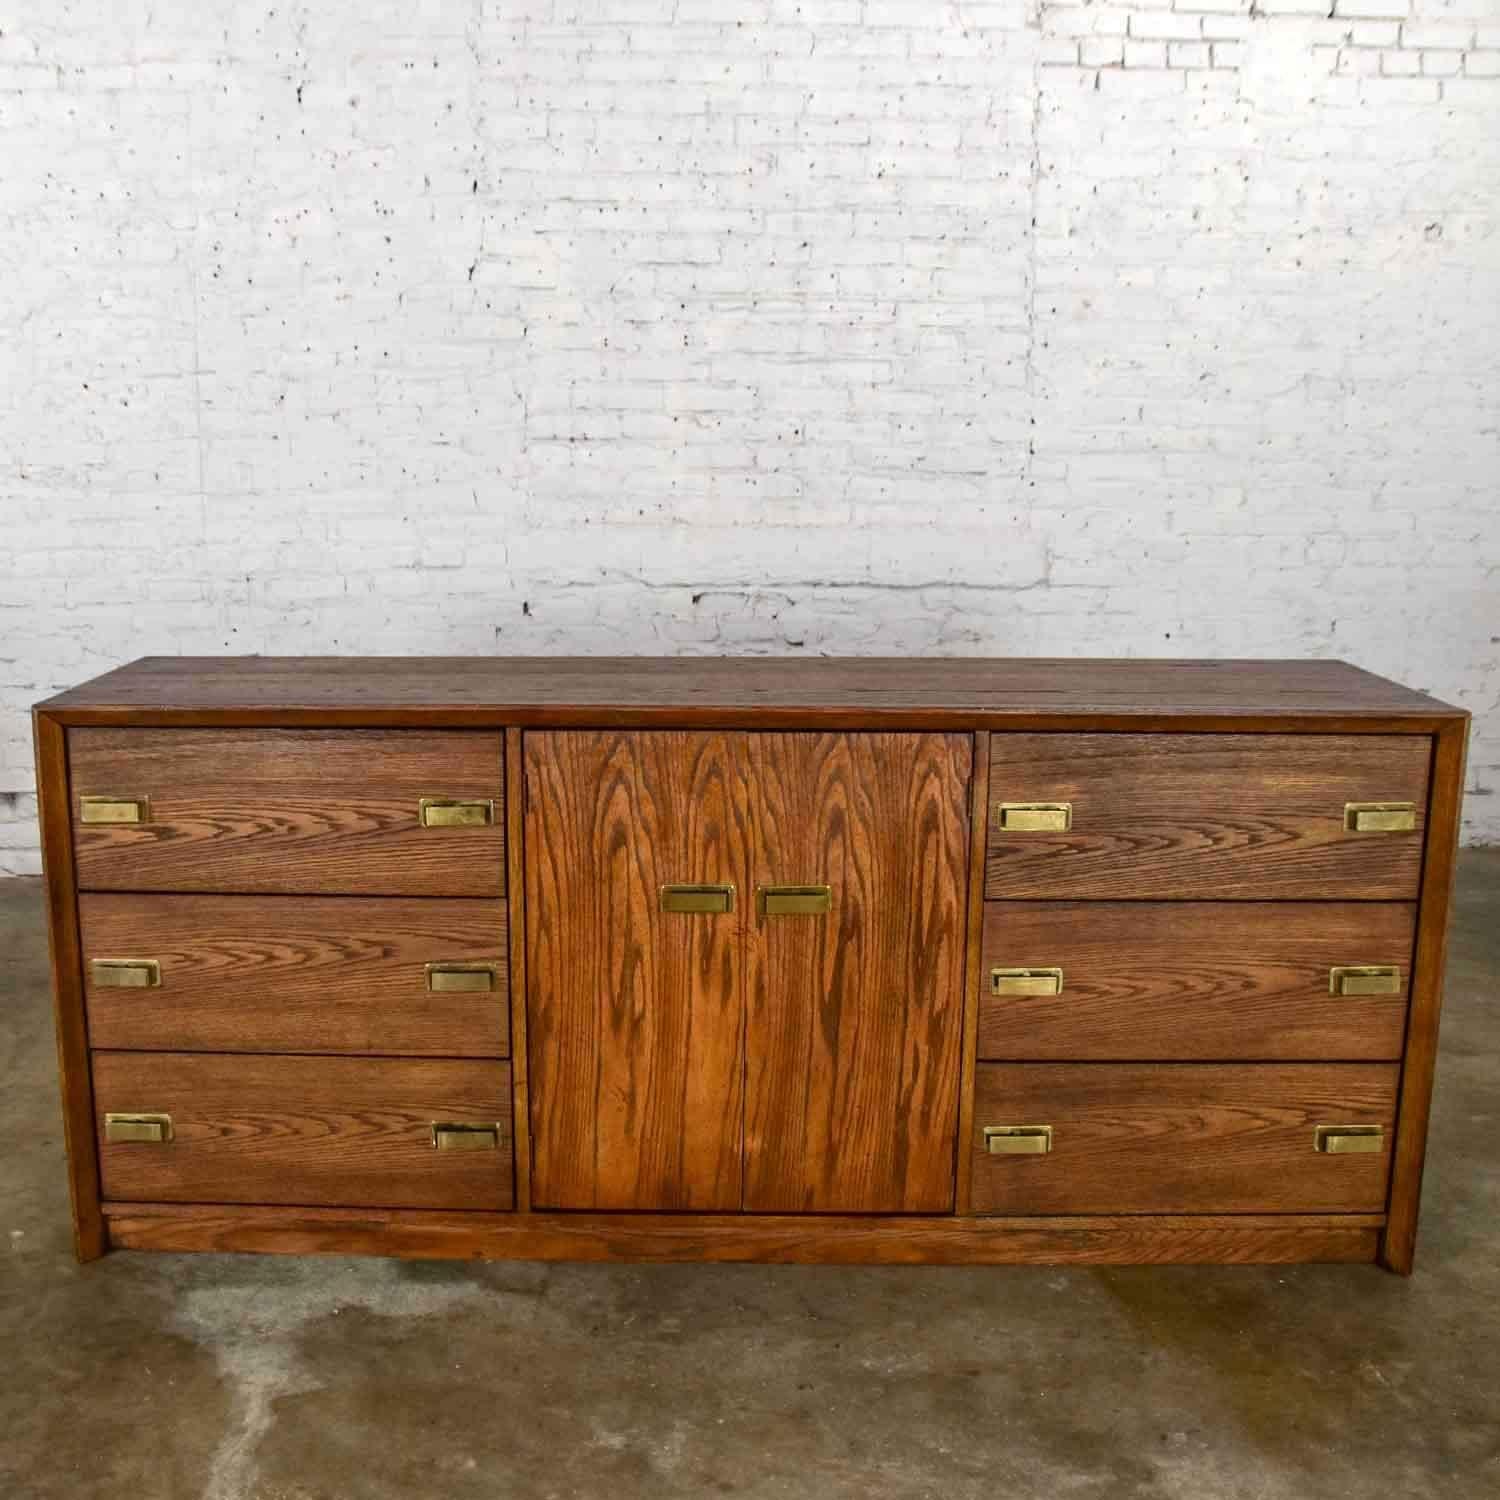 Bassett Modern Credenza Buffet Dresser in Medium Tone Finish & Brass Plate Pulls In Good Condition For Sale In Topeka, KS